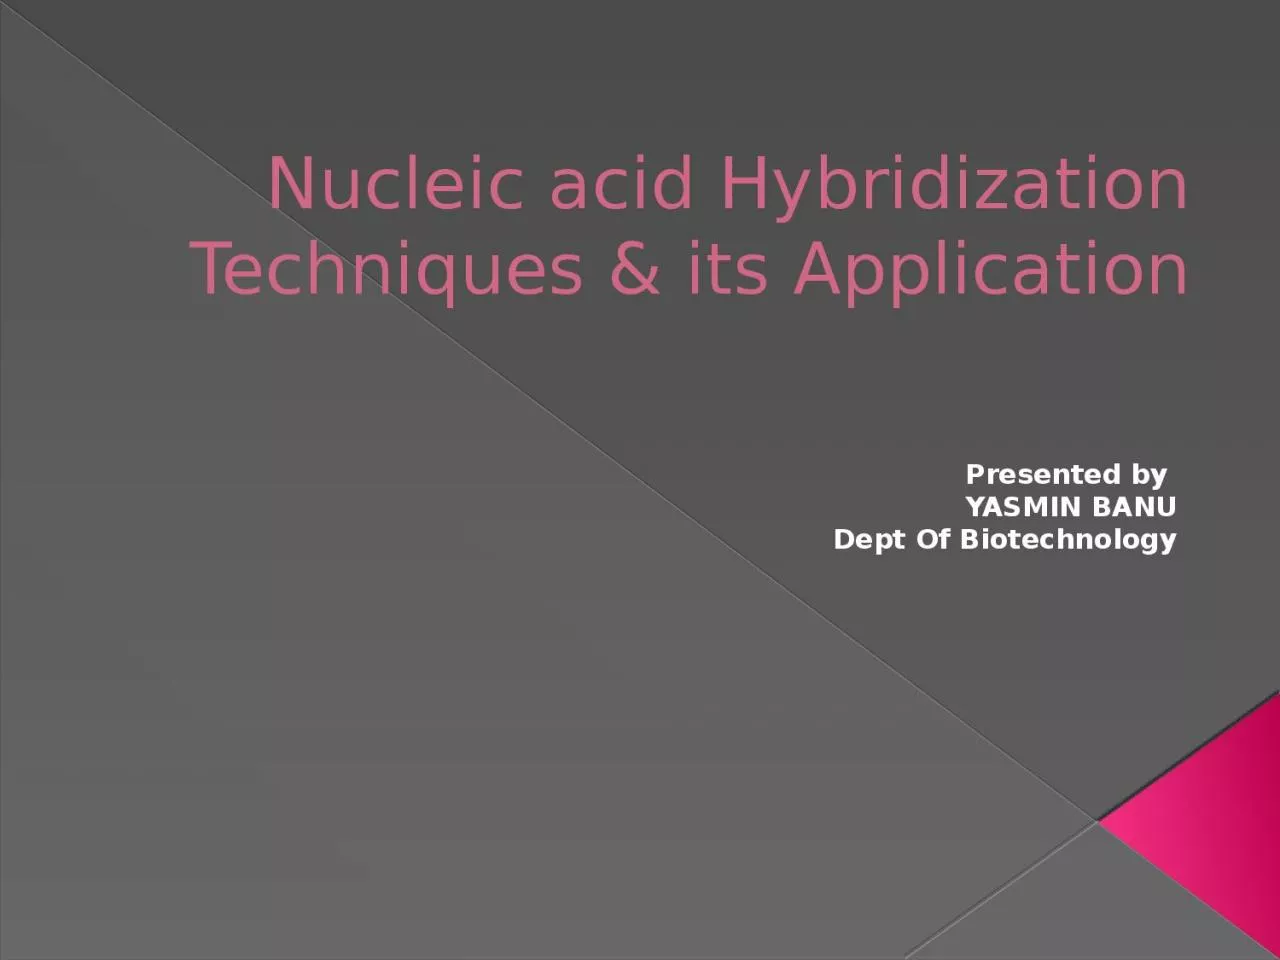 Nucleic acid Hybridization Techniques & its Application